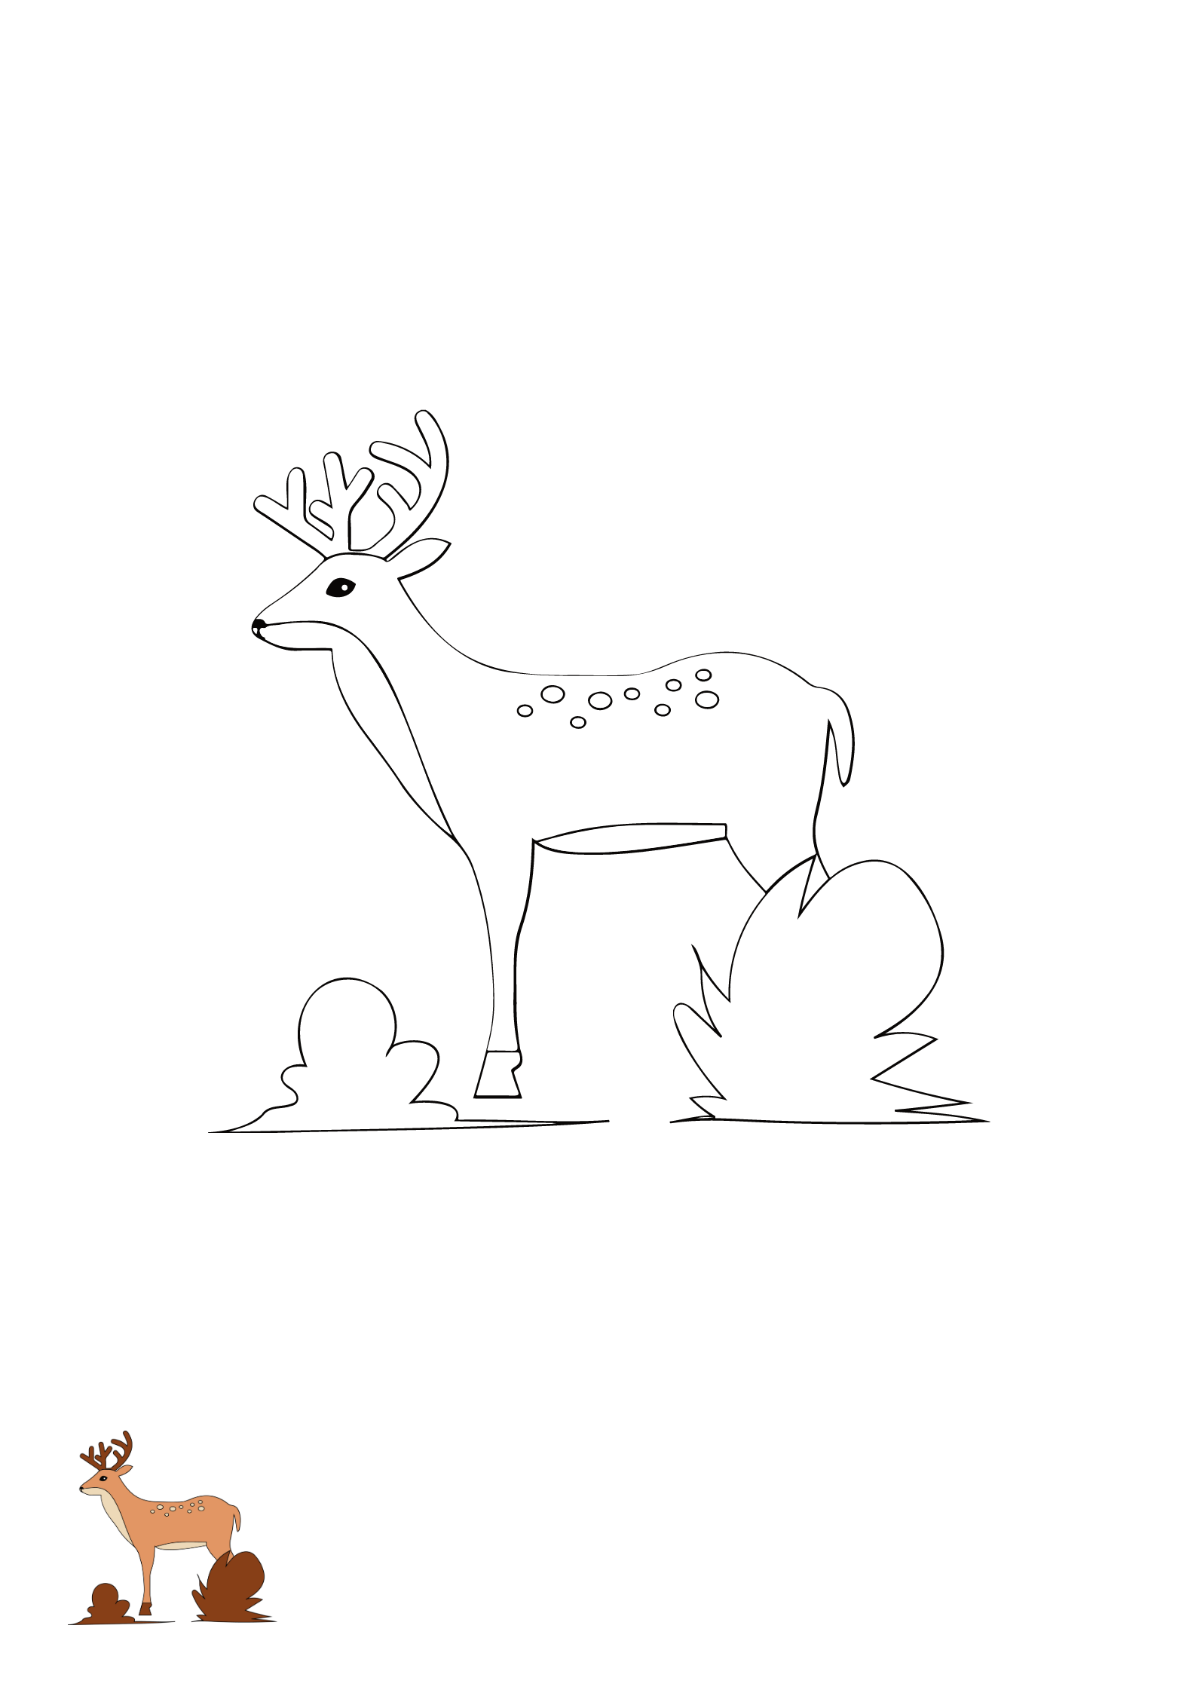 Free Simple Deer Coloring Page Template